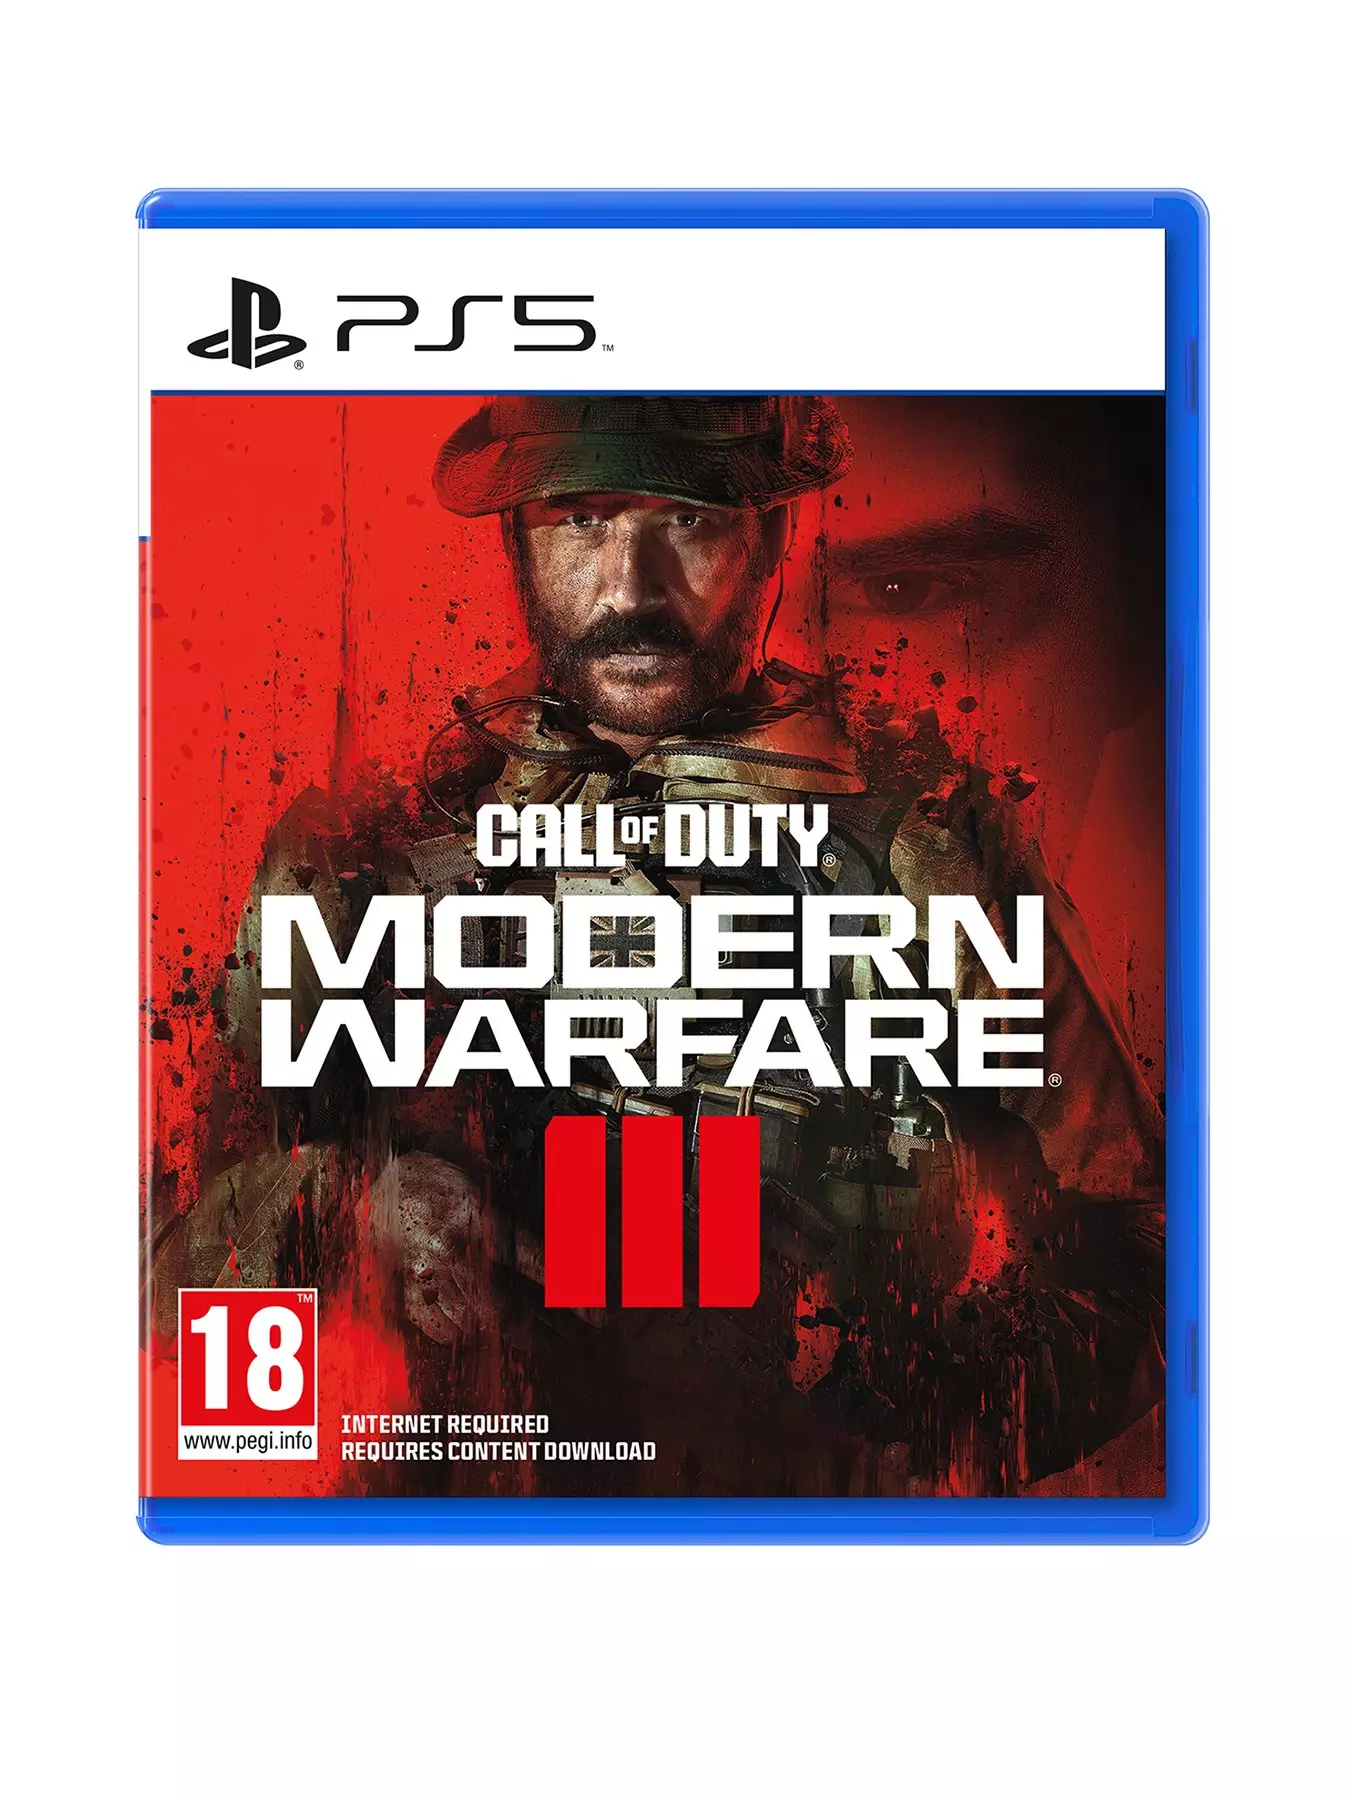 CUSTM REPLACEMENT CASE NO DISC Modern Warfare 2019 PS5 SEE DESCRIPTION